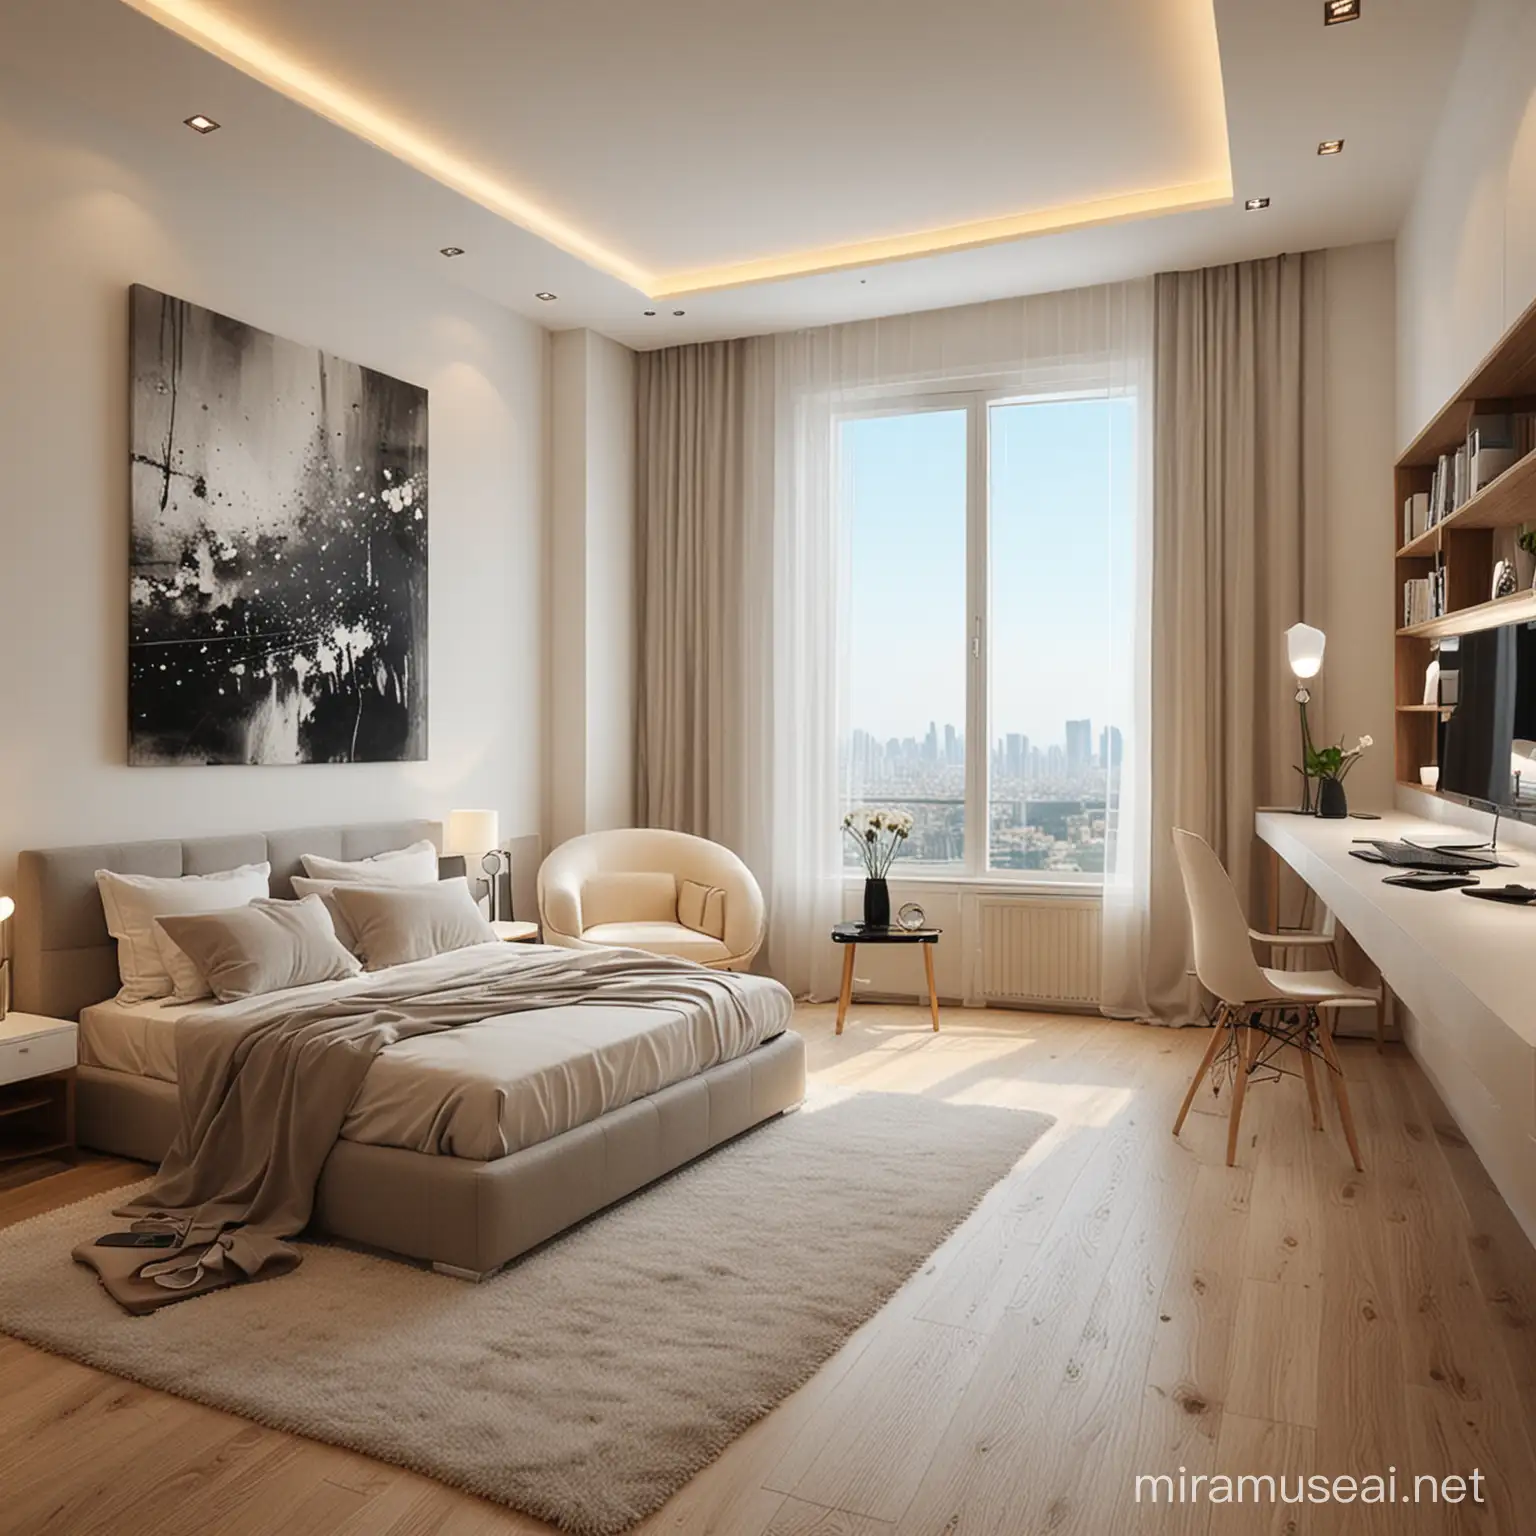 Contemporary Room Interior with Minimalist Design